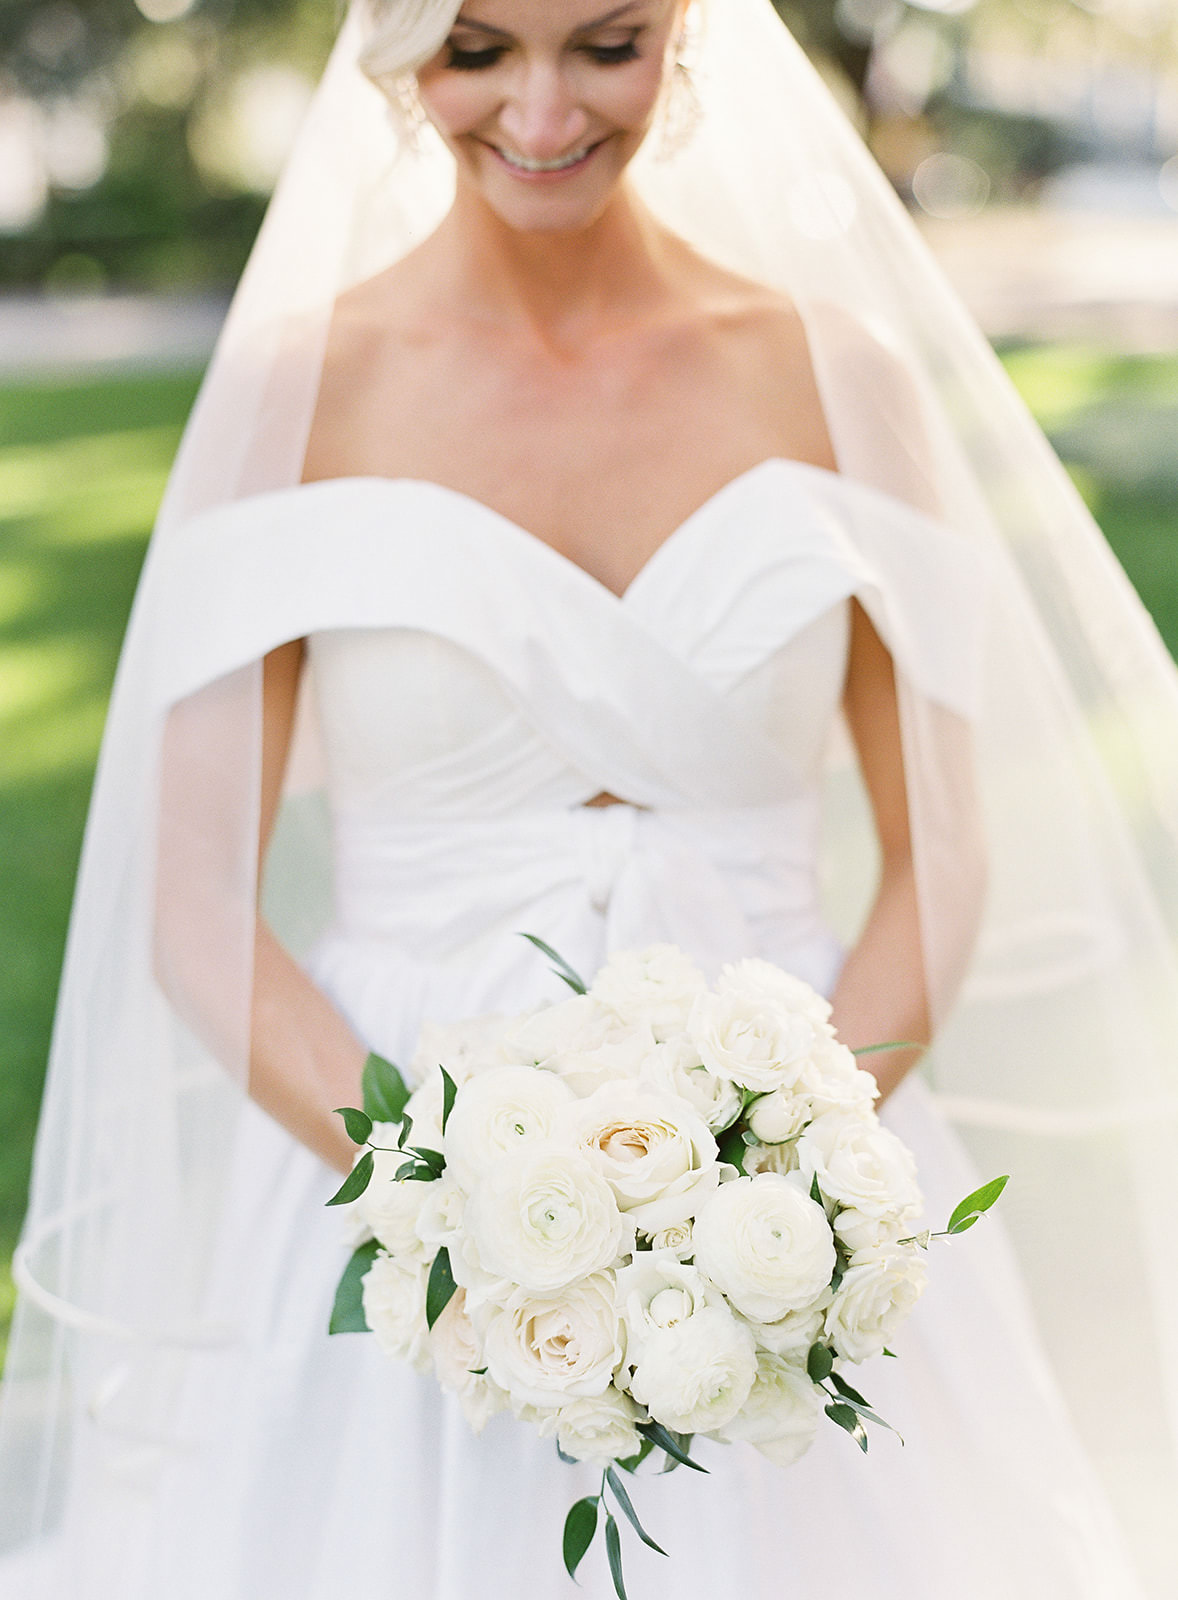 Classic Bride Wearing Off the Shoulder A-Line Wedding Dress Holding All White Roses Bouquet | Tampa Bay Wedding Florist Botanica International Design Studio